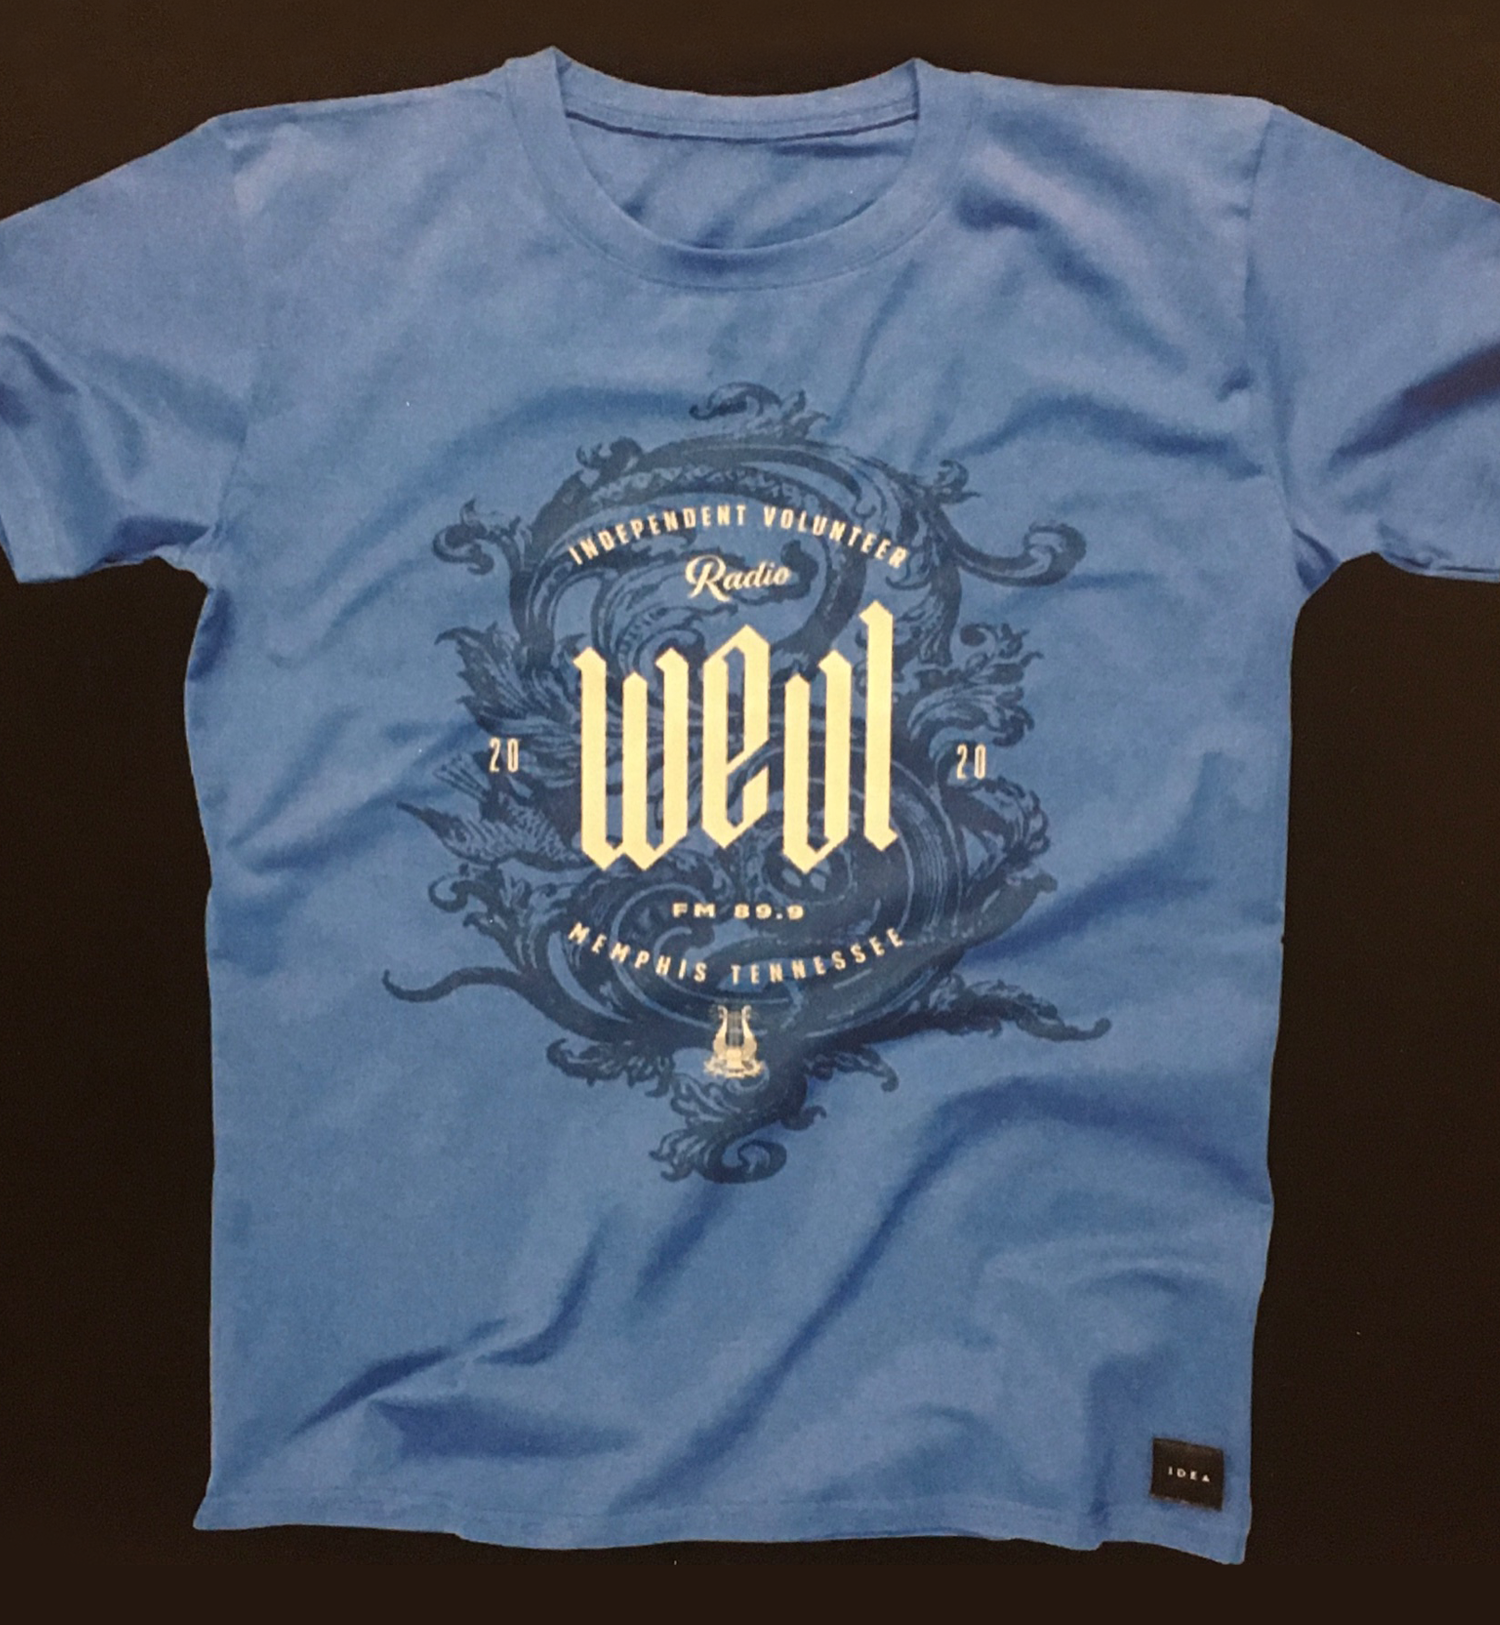 WEVL 2020 T-Shirt